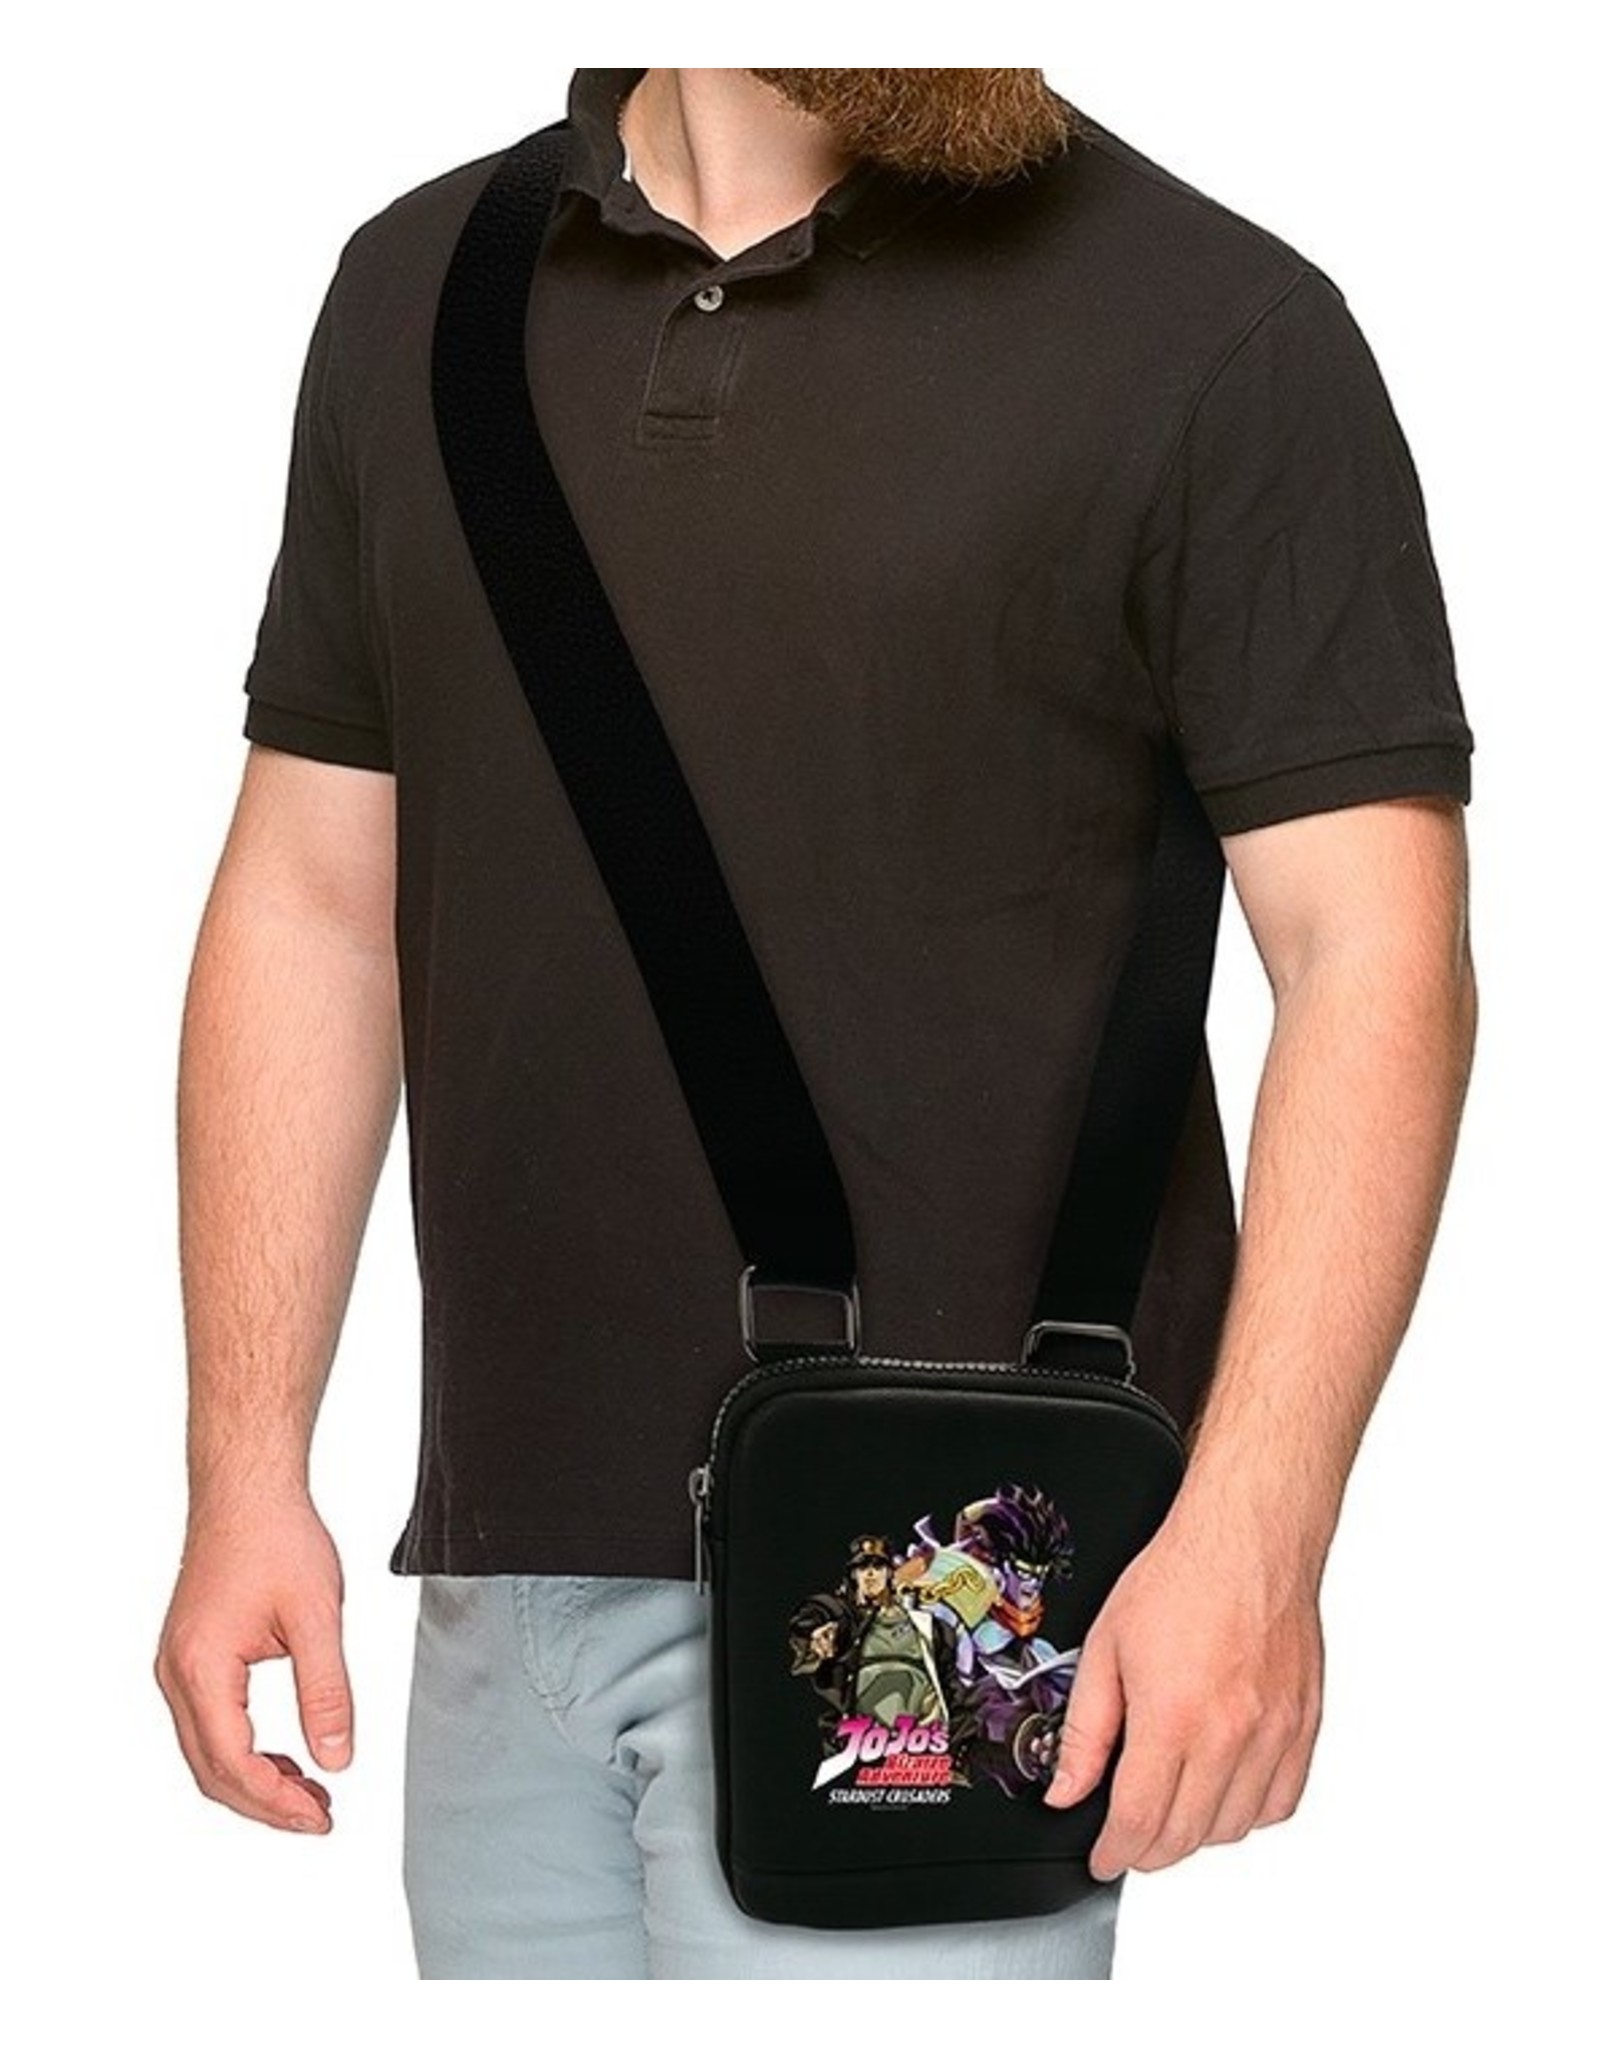 abysse corp Merchandise bags - JOJO'S BIZARRE ADVENTURE Shoulder Bag Star Platinum